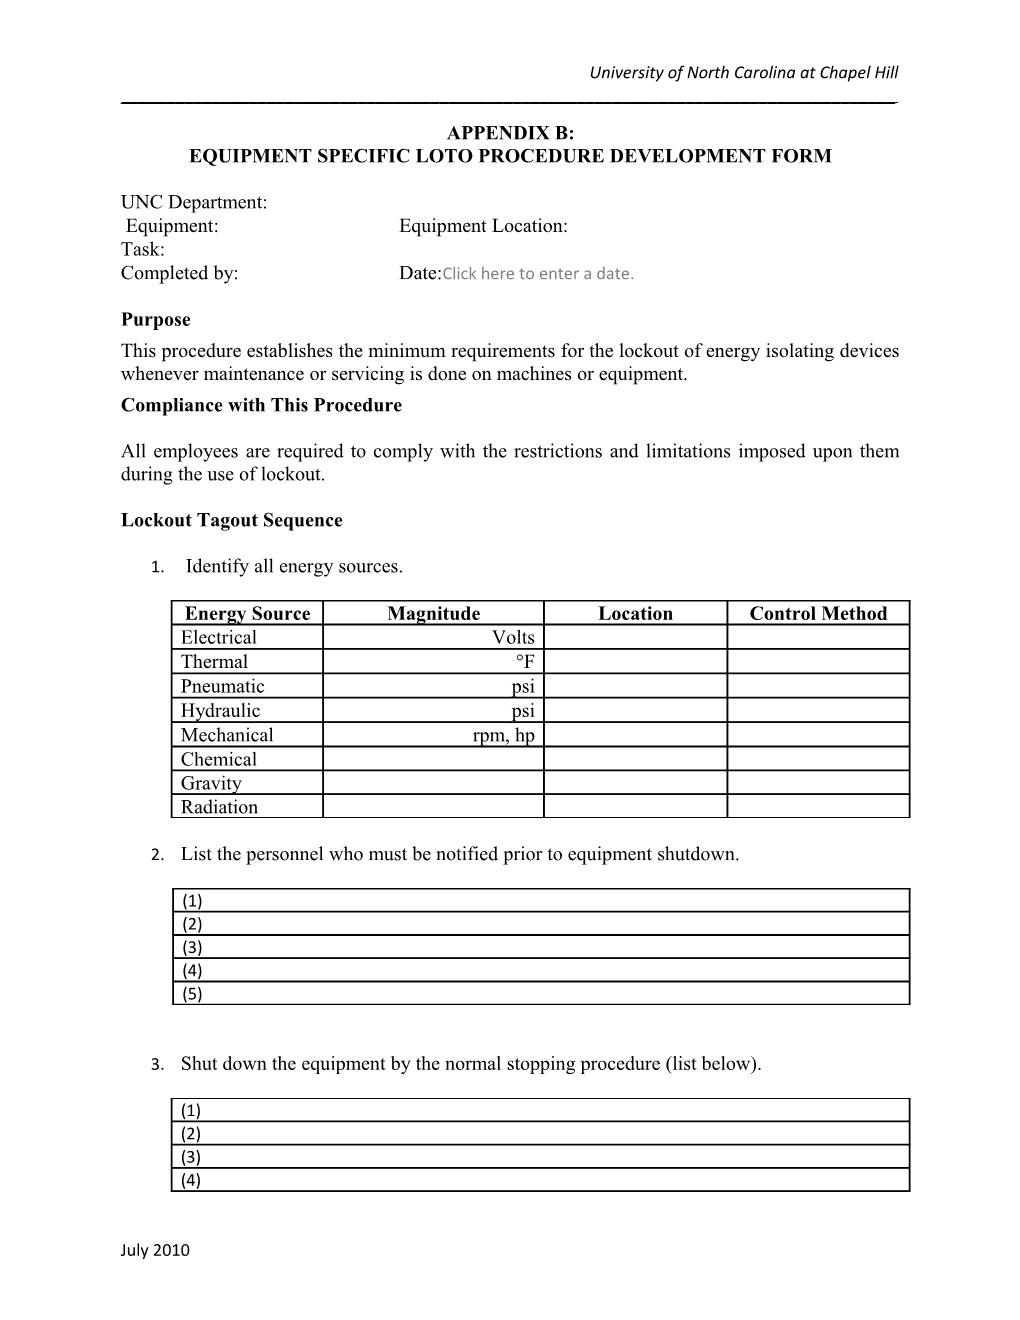 Equipment Specific Loto Procedure Development Form